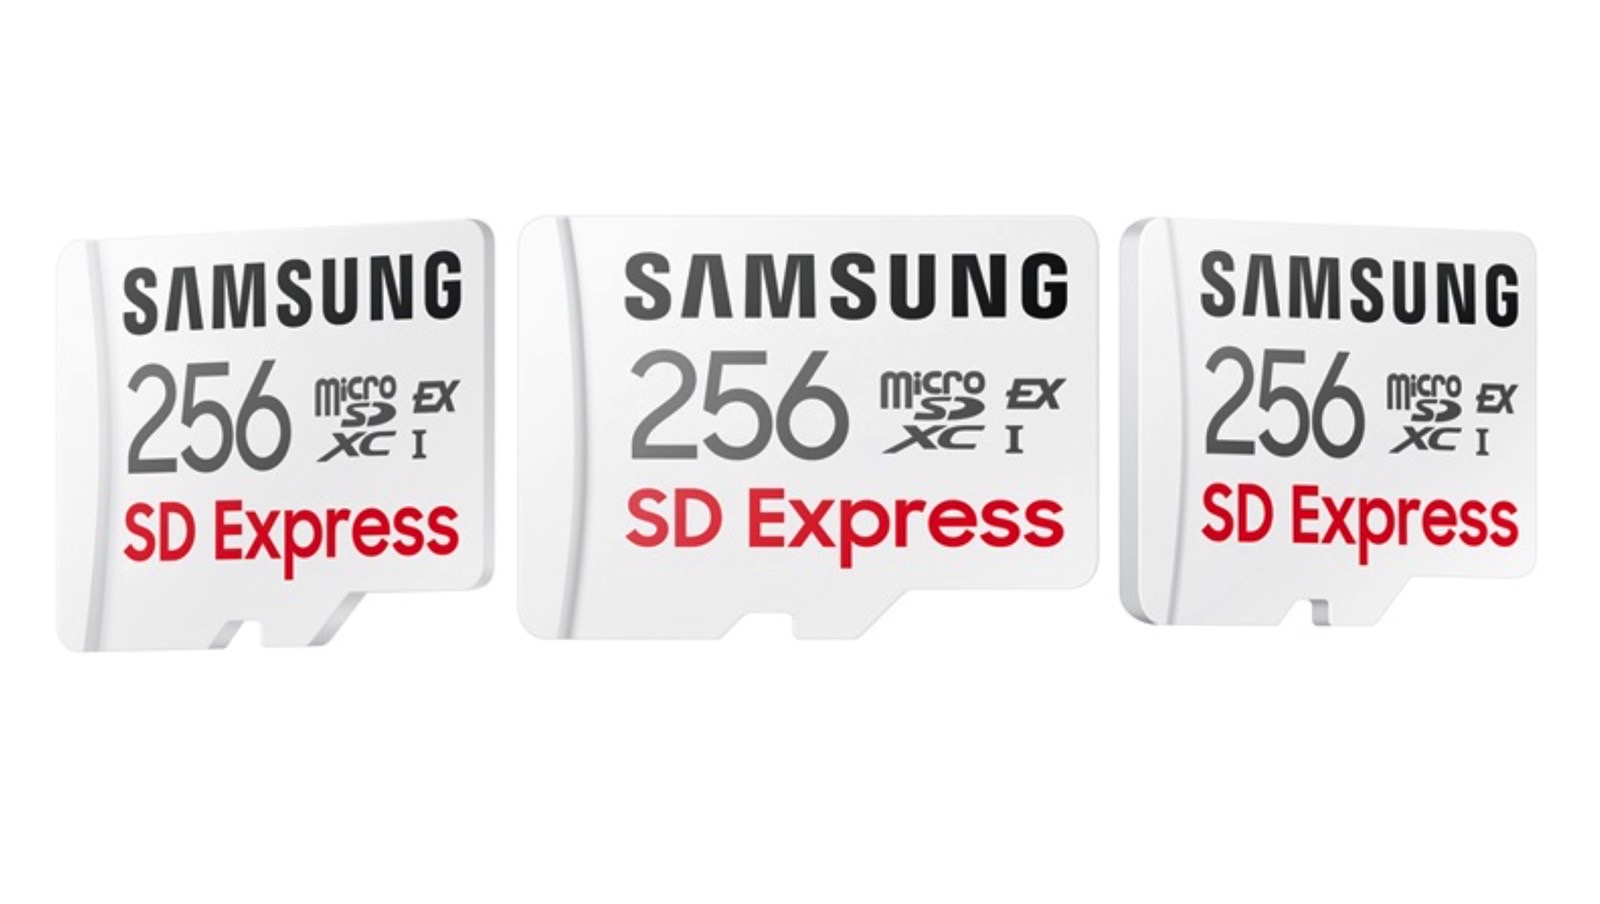 The new 256GB Samung SD Express microSD card.